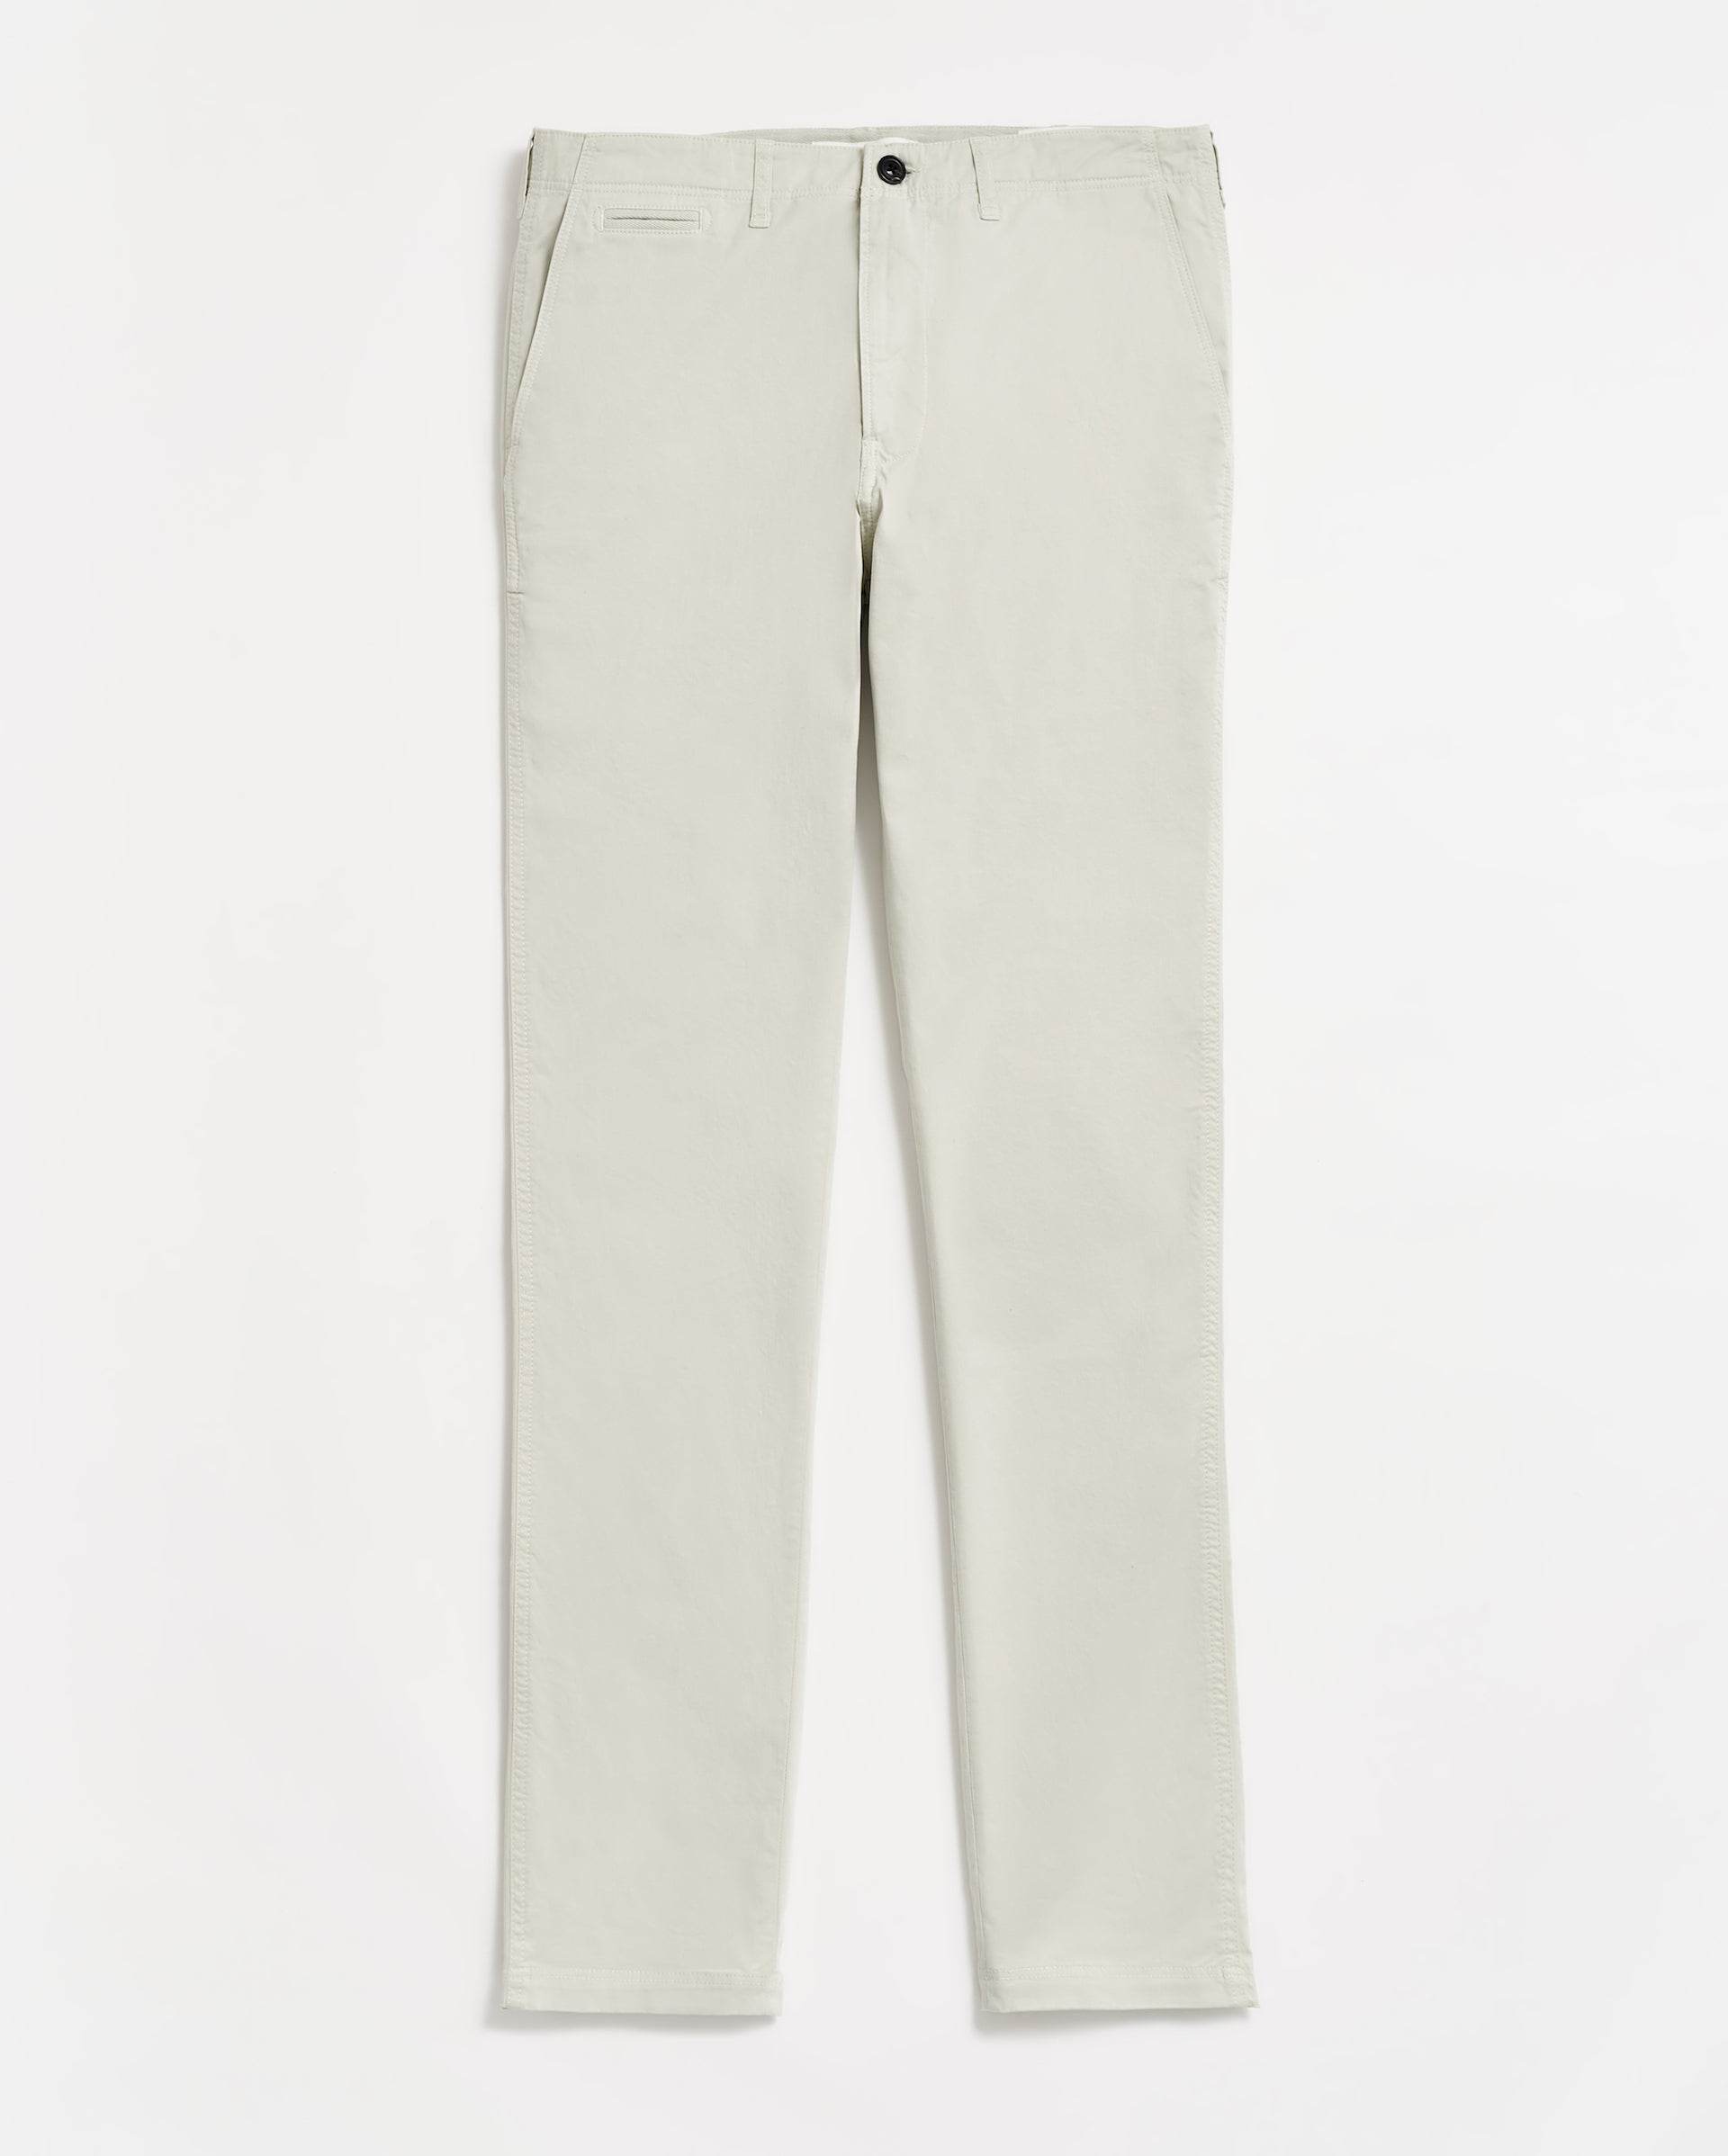 Men's Chino Sale | Shop Men's Pants| yd.